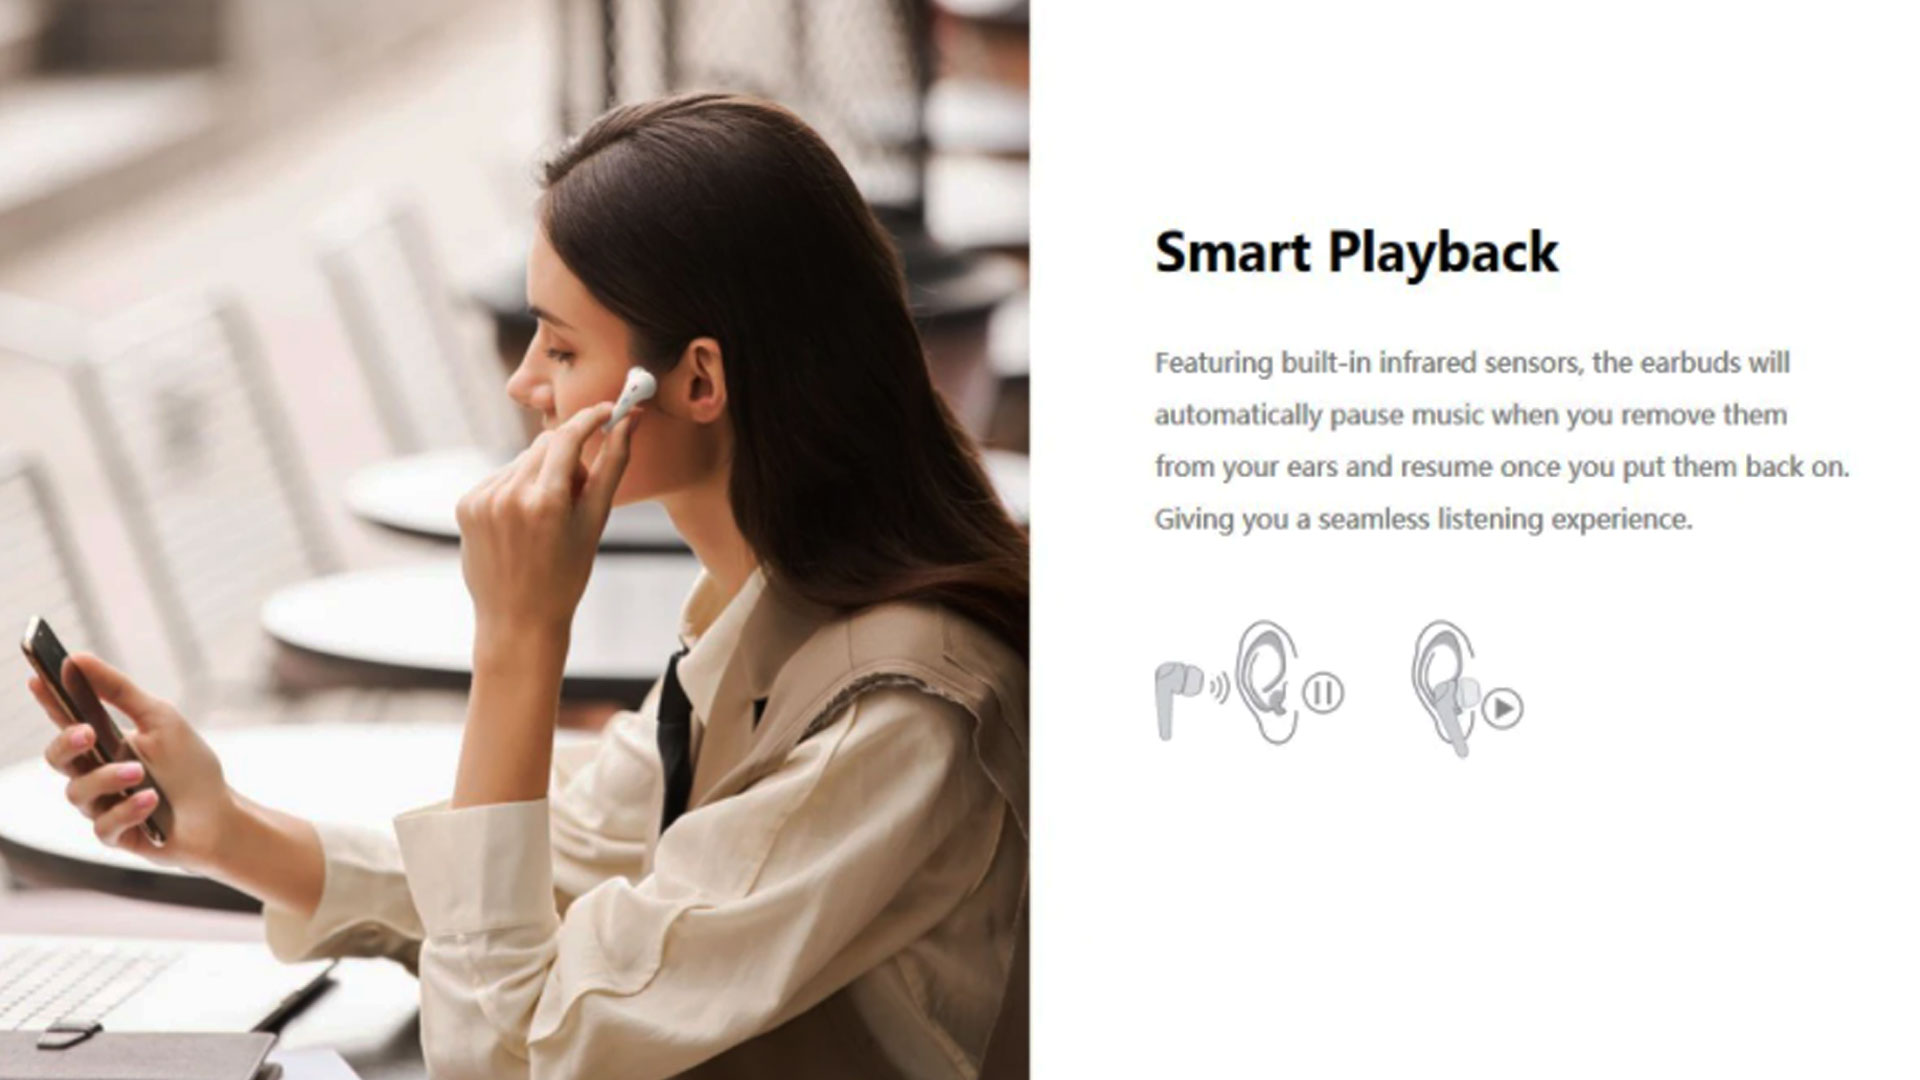 1MORE ComfoBuds Pro ComfoBuds Pro TWS earphones wireless earbuds